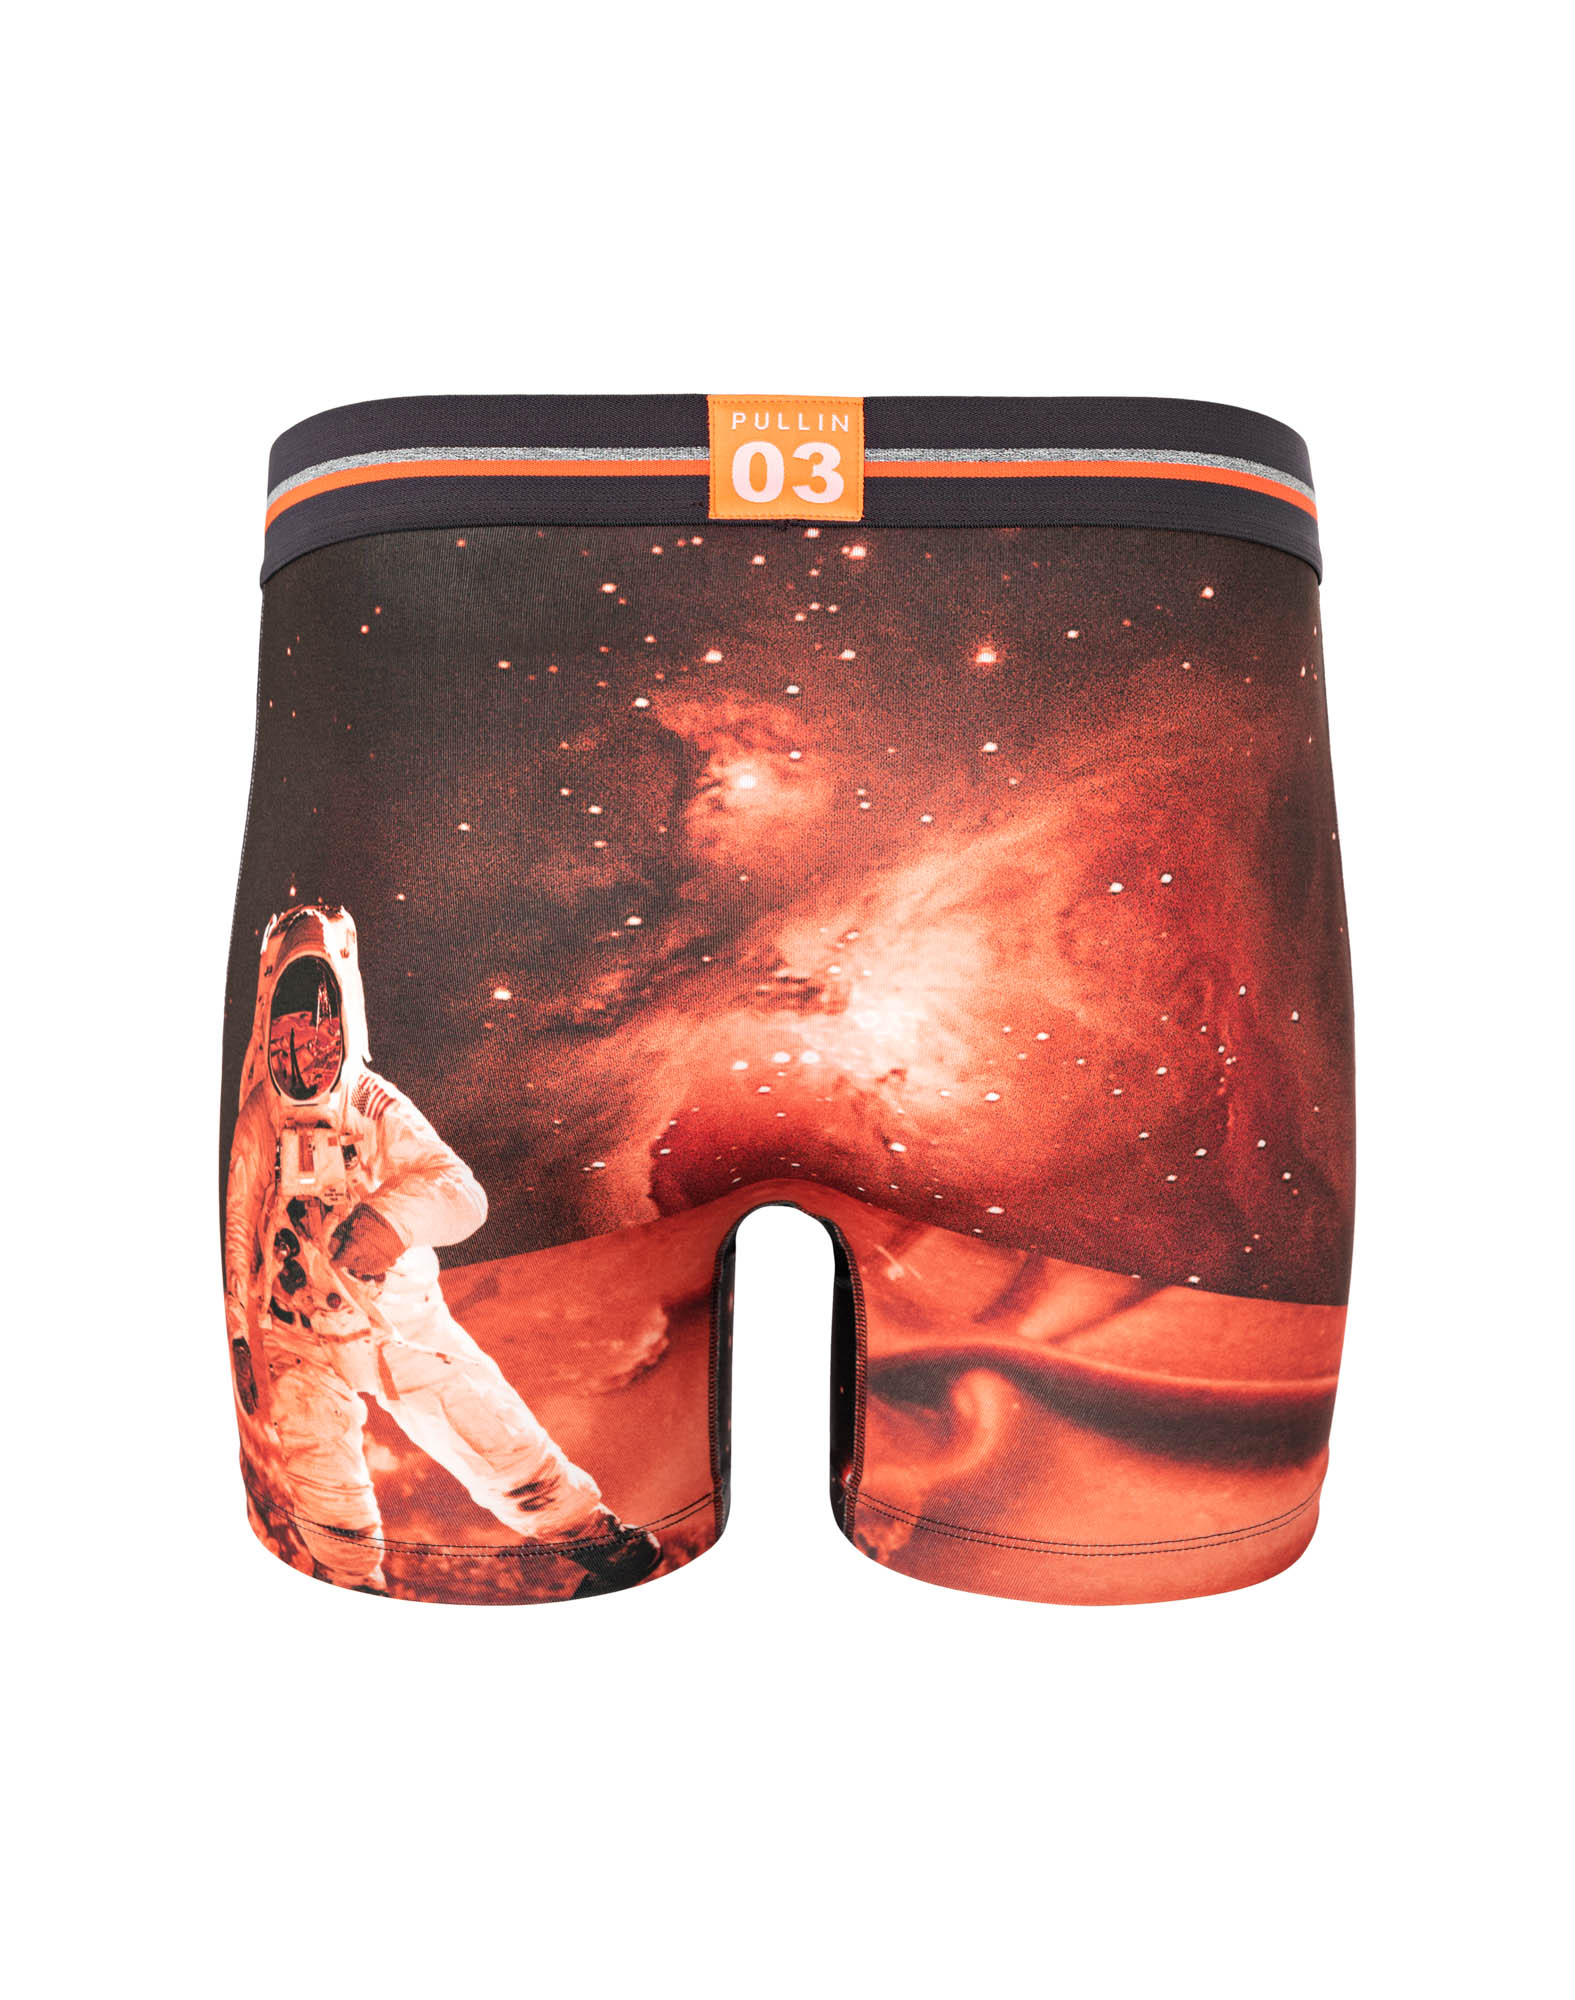 RED MEN'S TRUNK FASHION 2 MARS - Men's underwear PULLIN